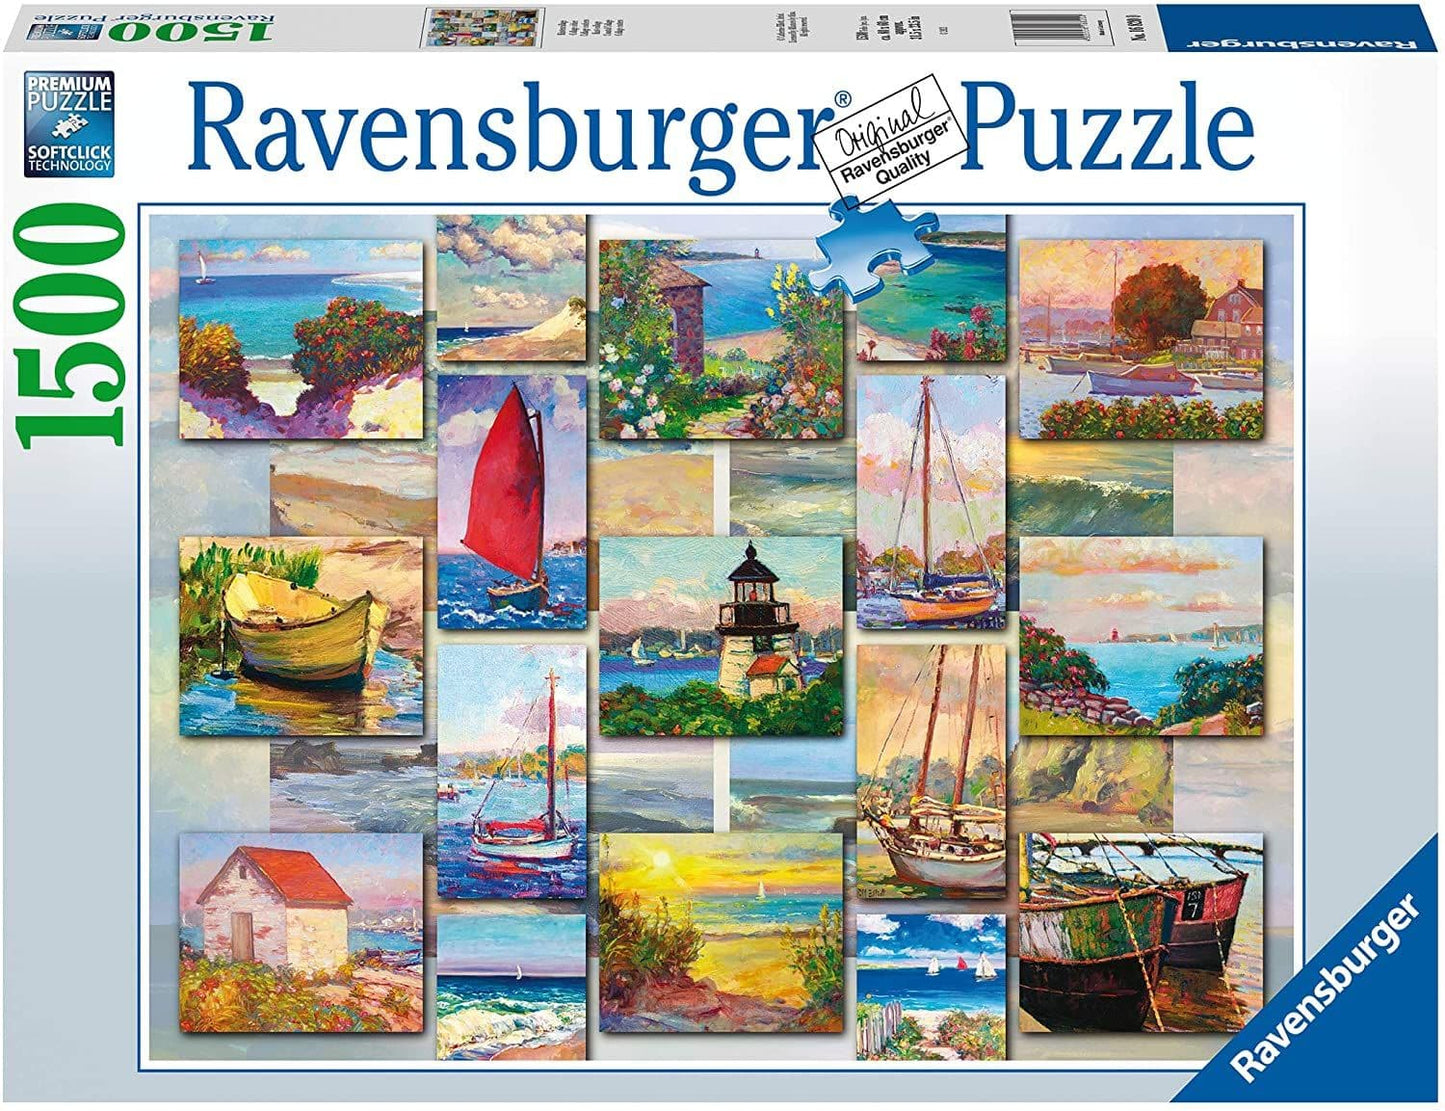 Ravensburger - Coastal Collage, 1500 Piece Jigsaw Puzzle